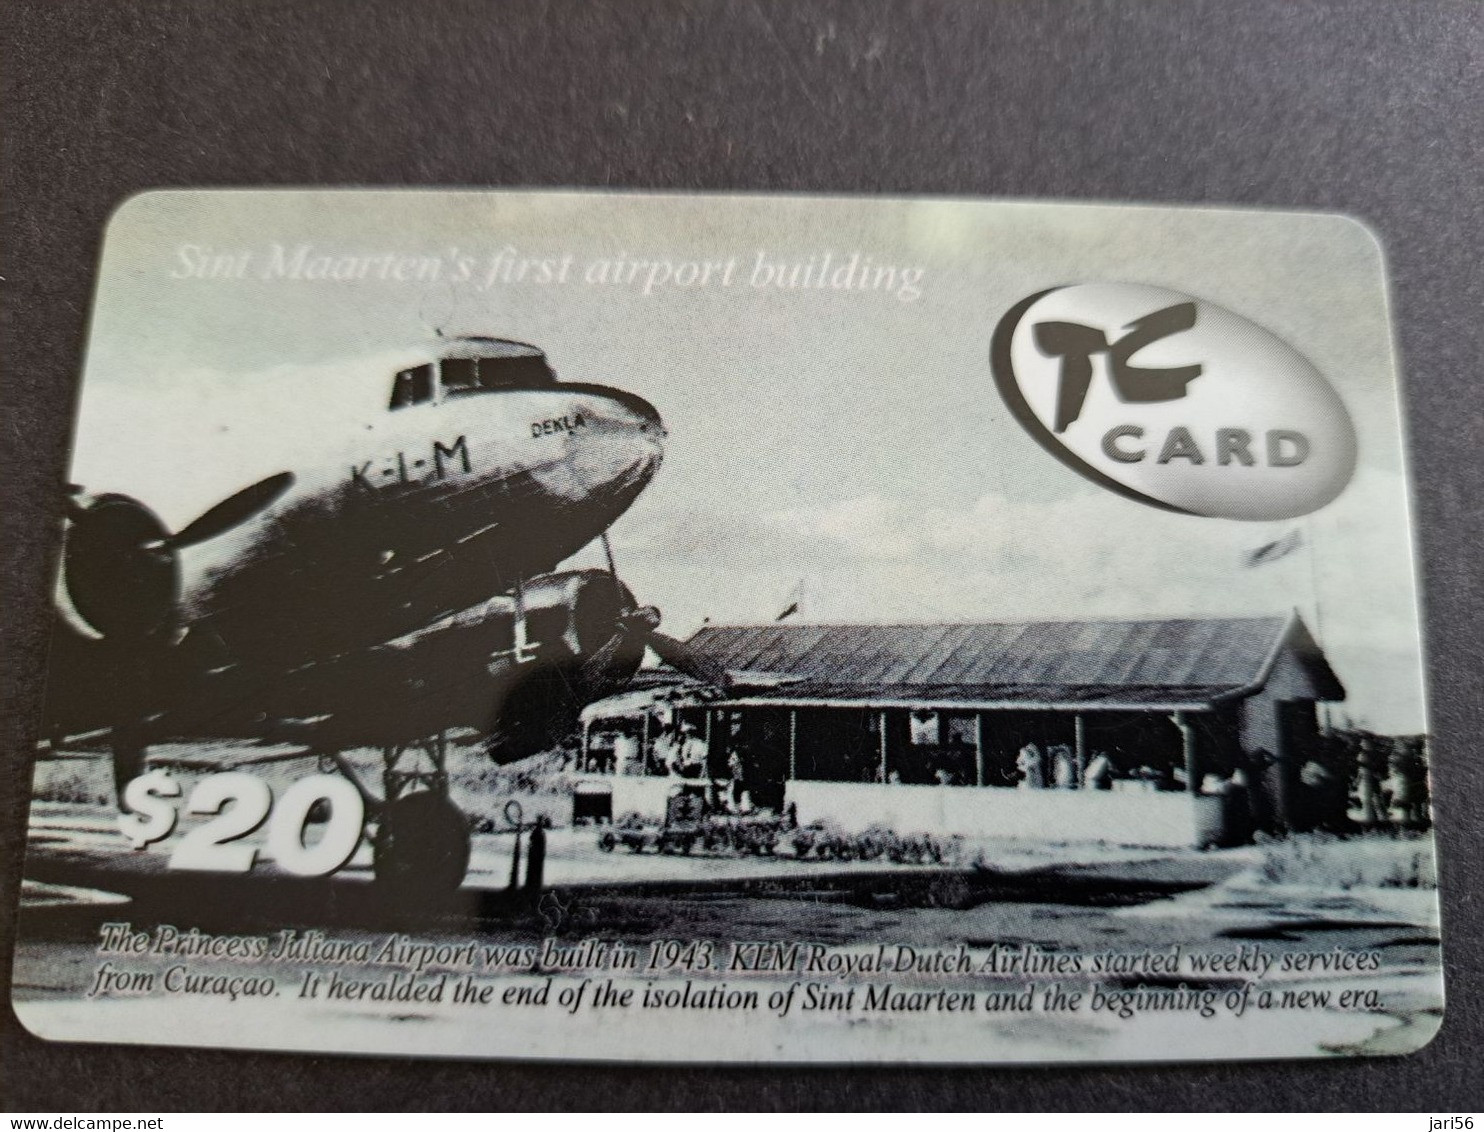 St MAARTEN  Prepaid  $20   ST MAARTEN  TC CARD  OLD AIRPORT BUILDING, KLM PLANE IN SIGHT    Fine Used Card  **10496** - Antilles (Netherlands)